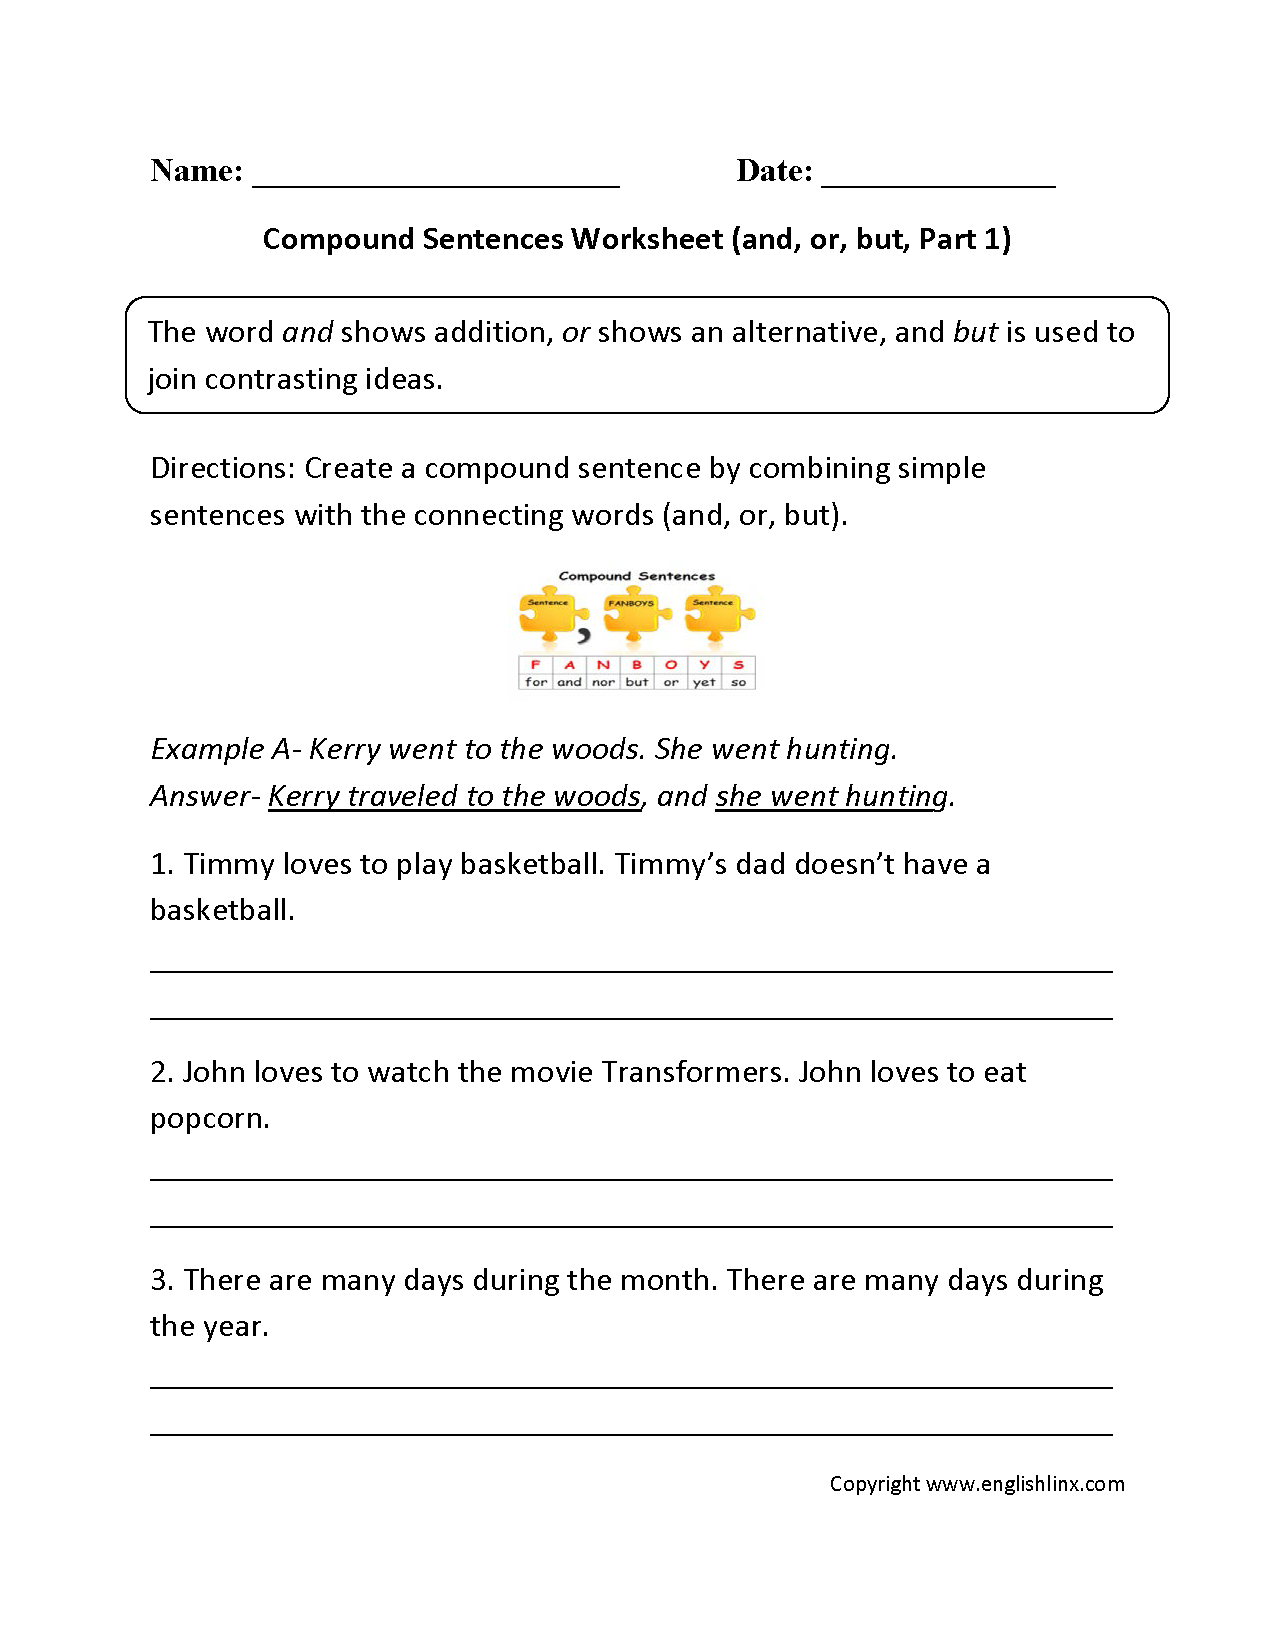 Compound Sentences Worksheet Pdf